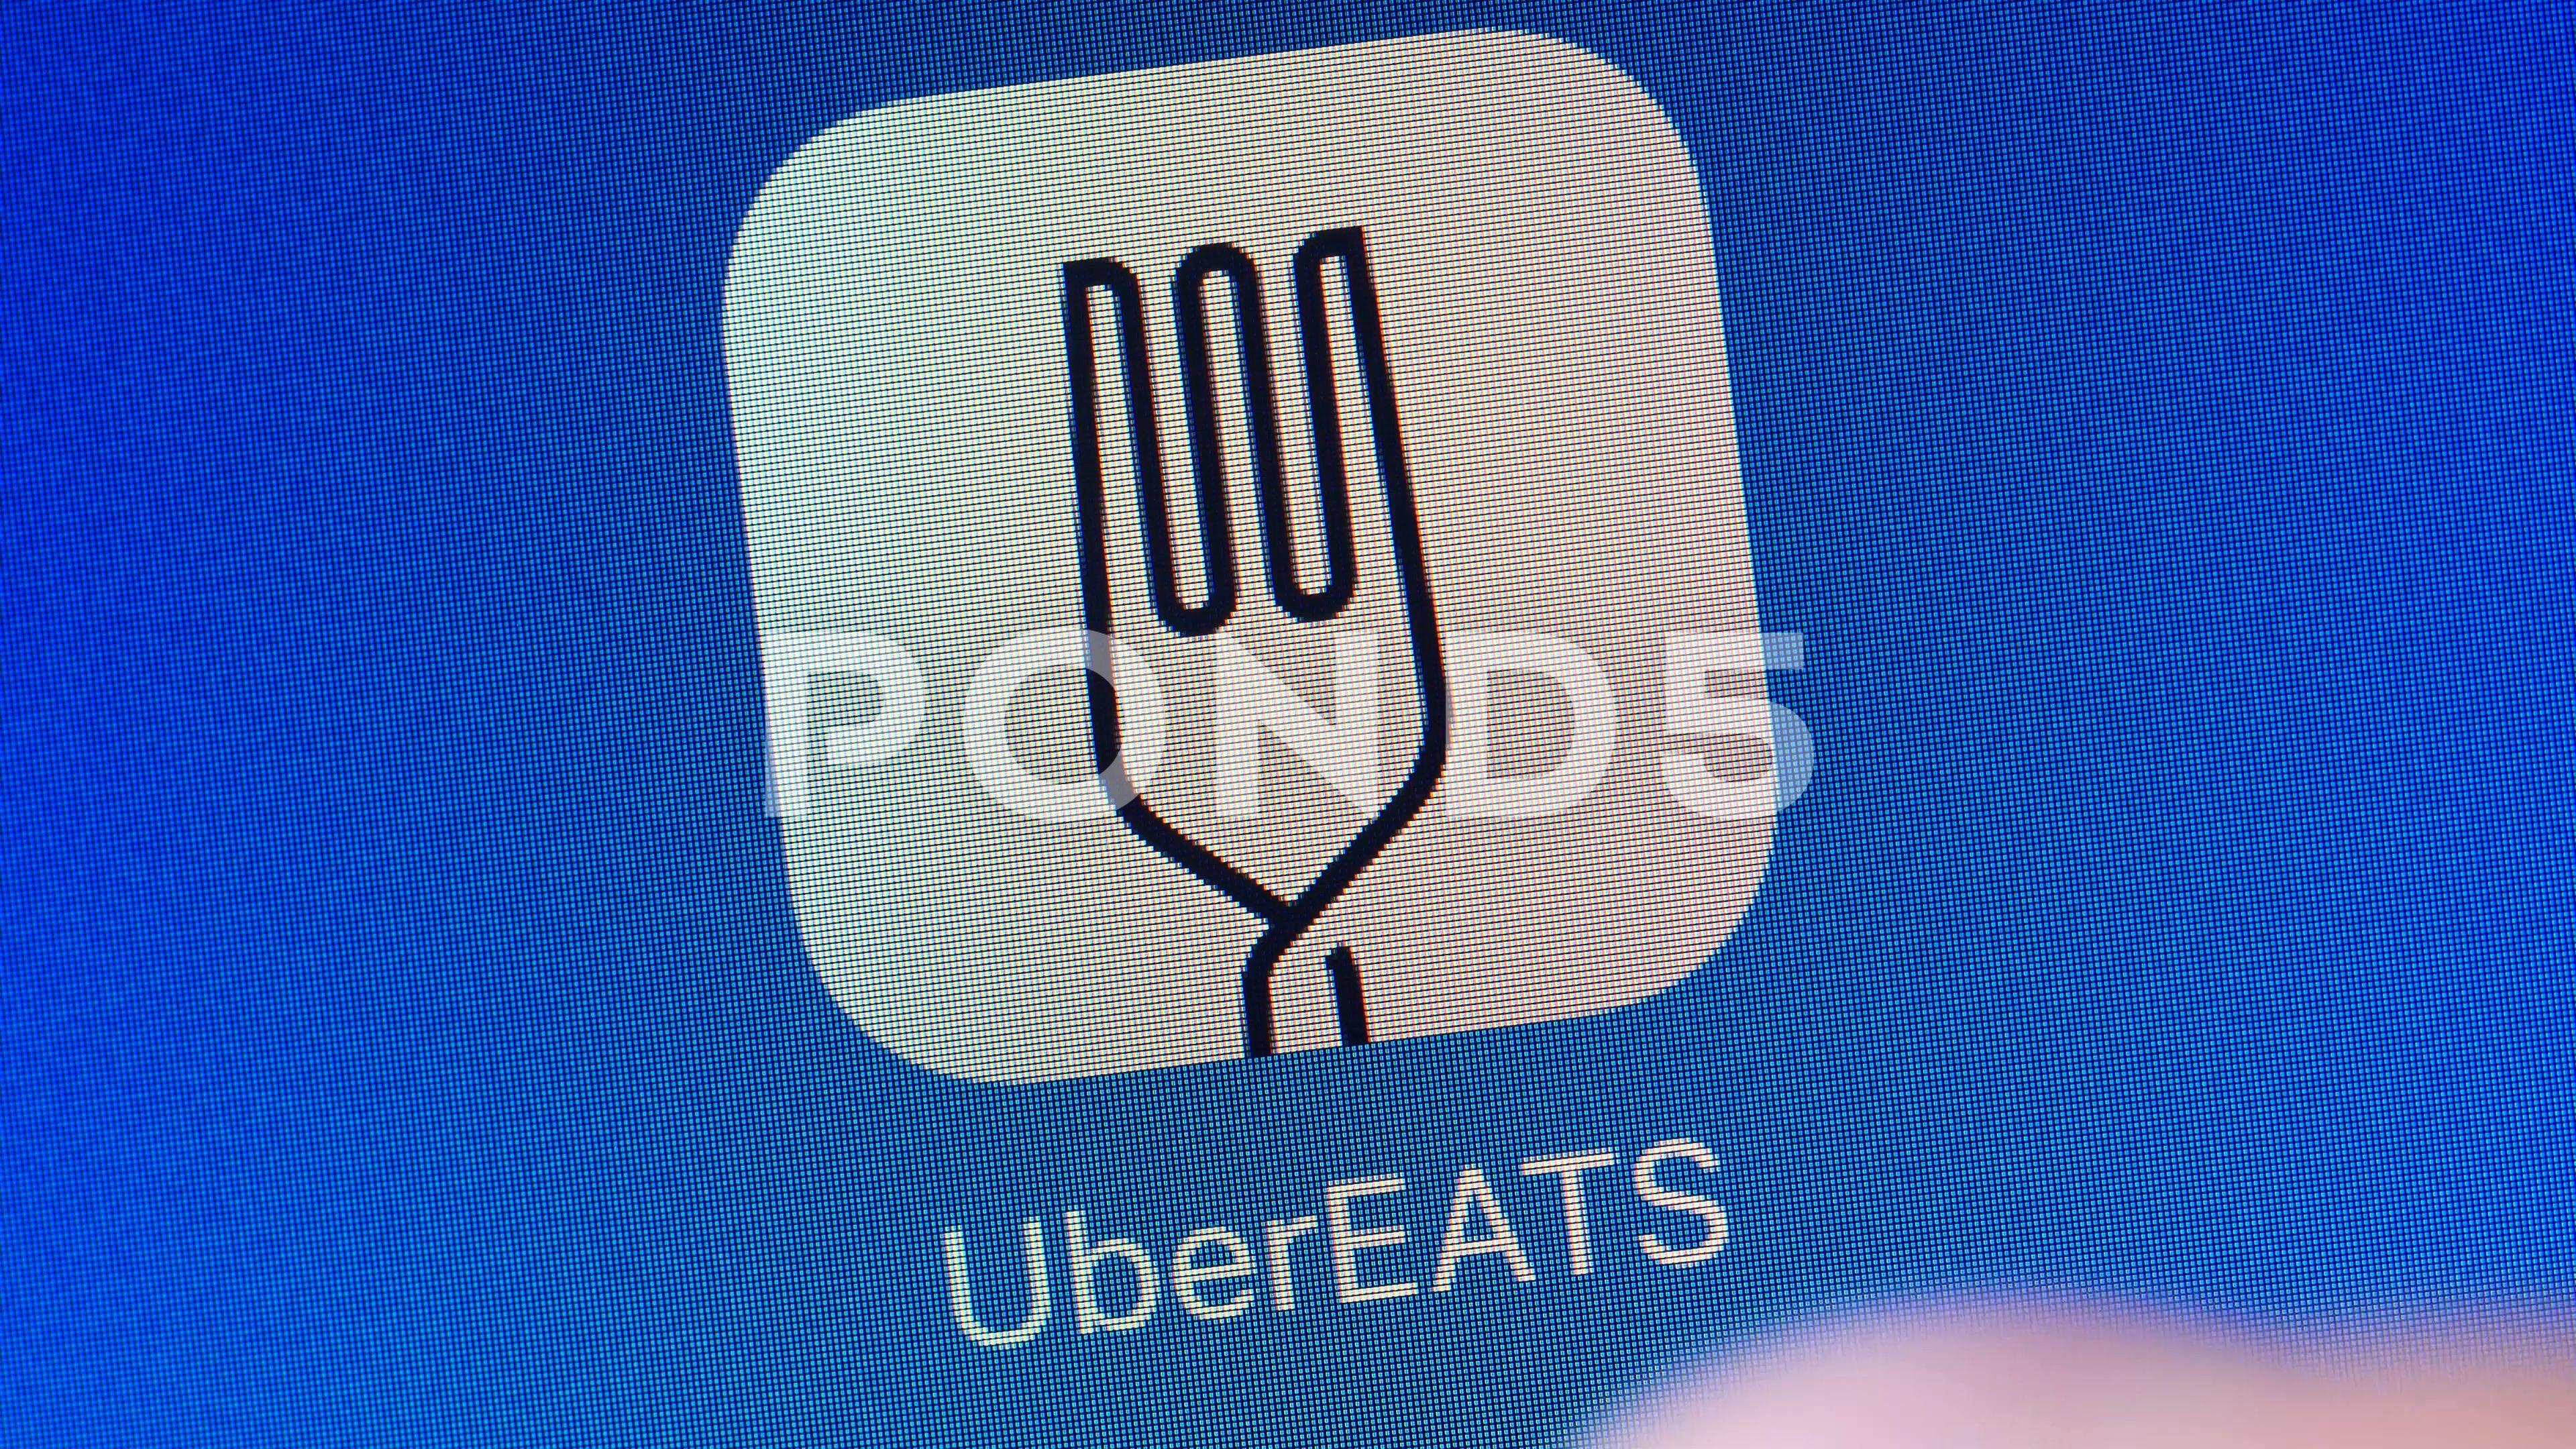 Uber Eats App Logo - Uber Eats App Icon Launching On Smartphone Screen ~ Video #77576385